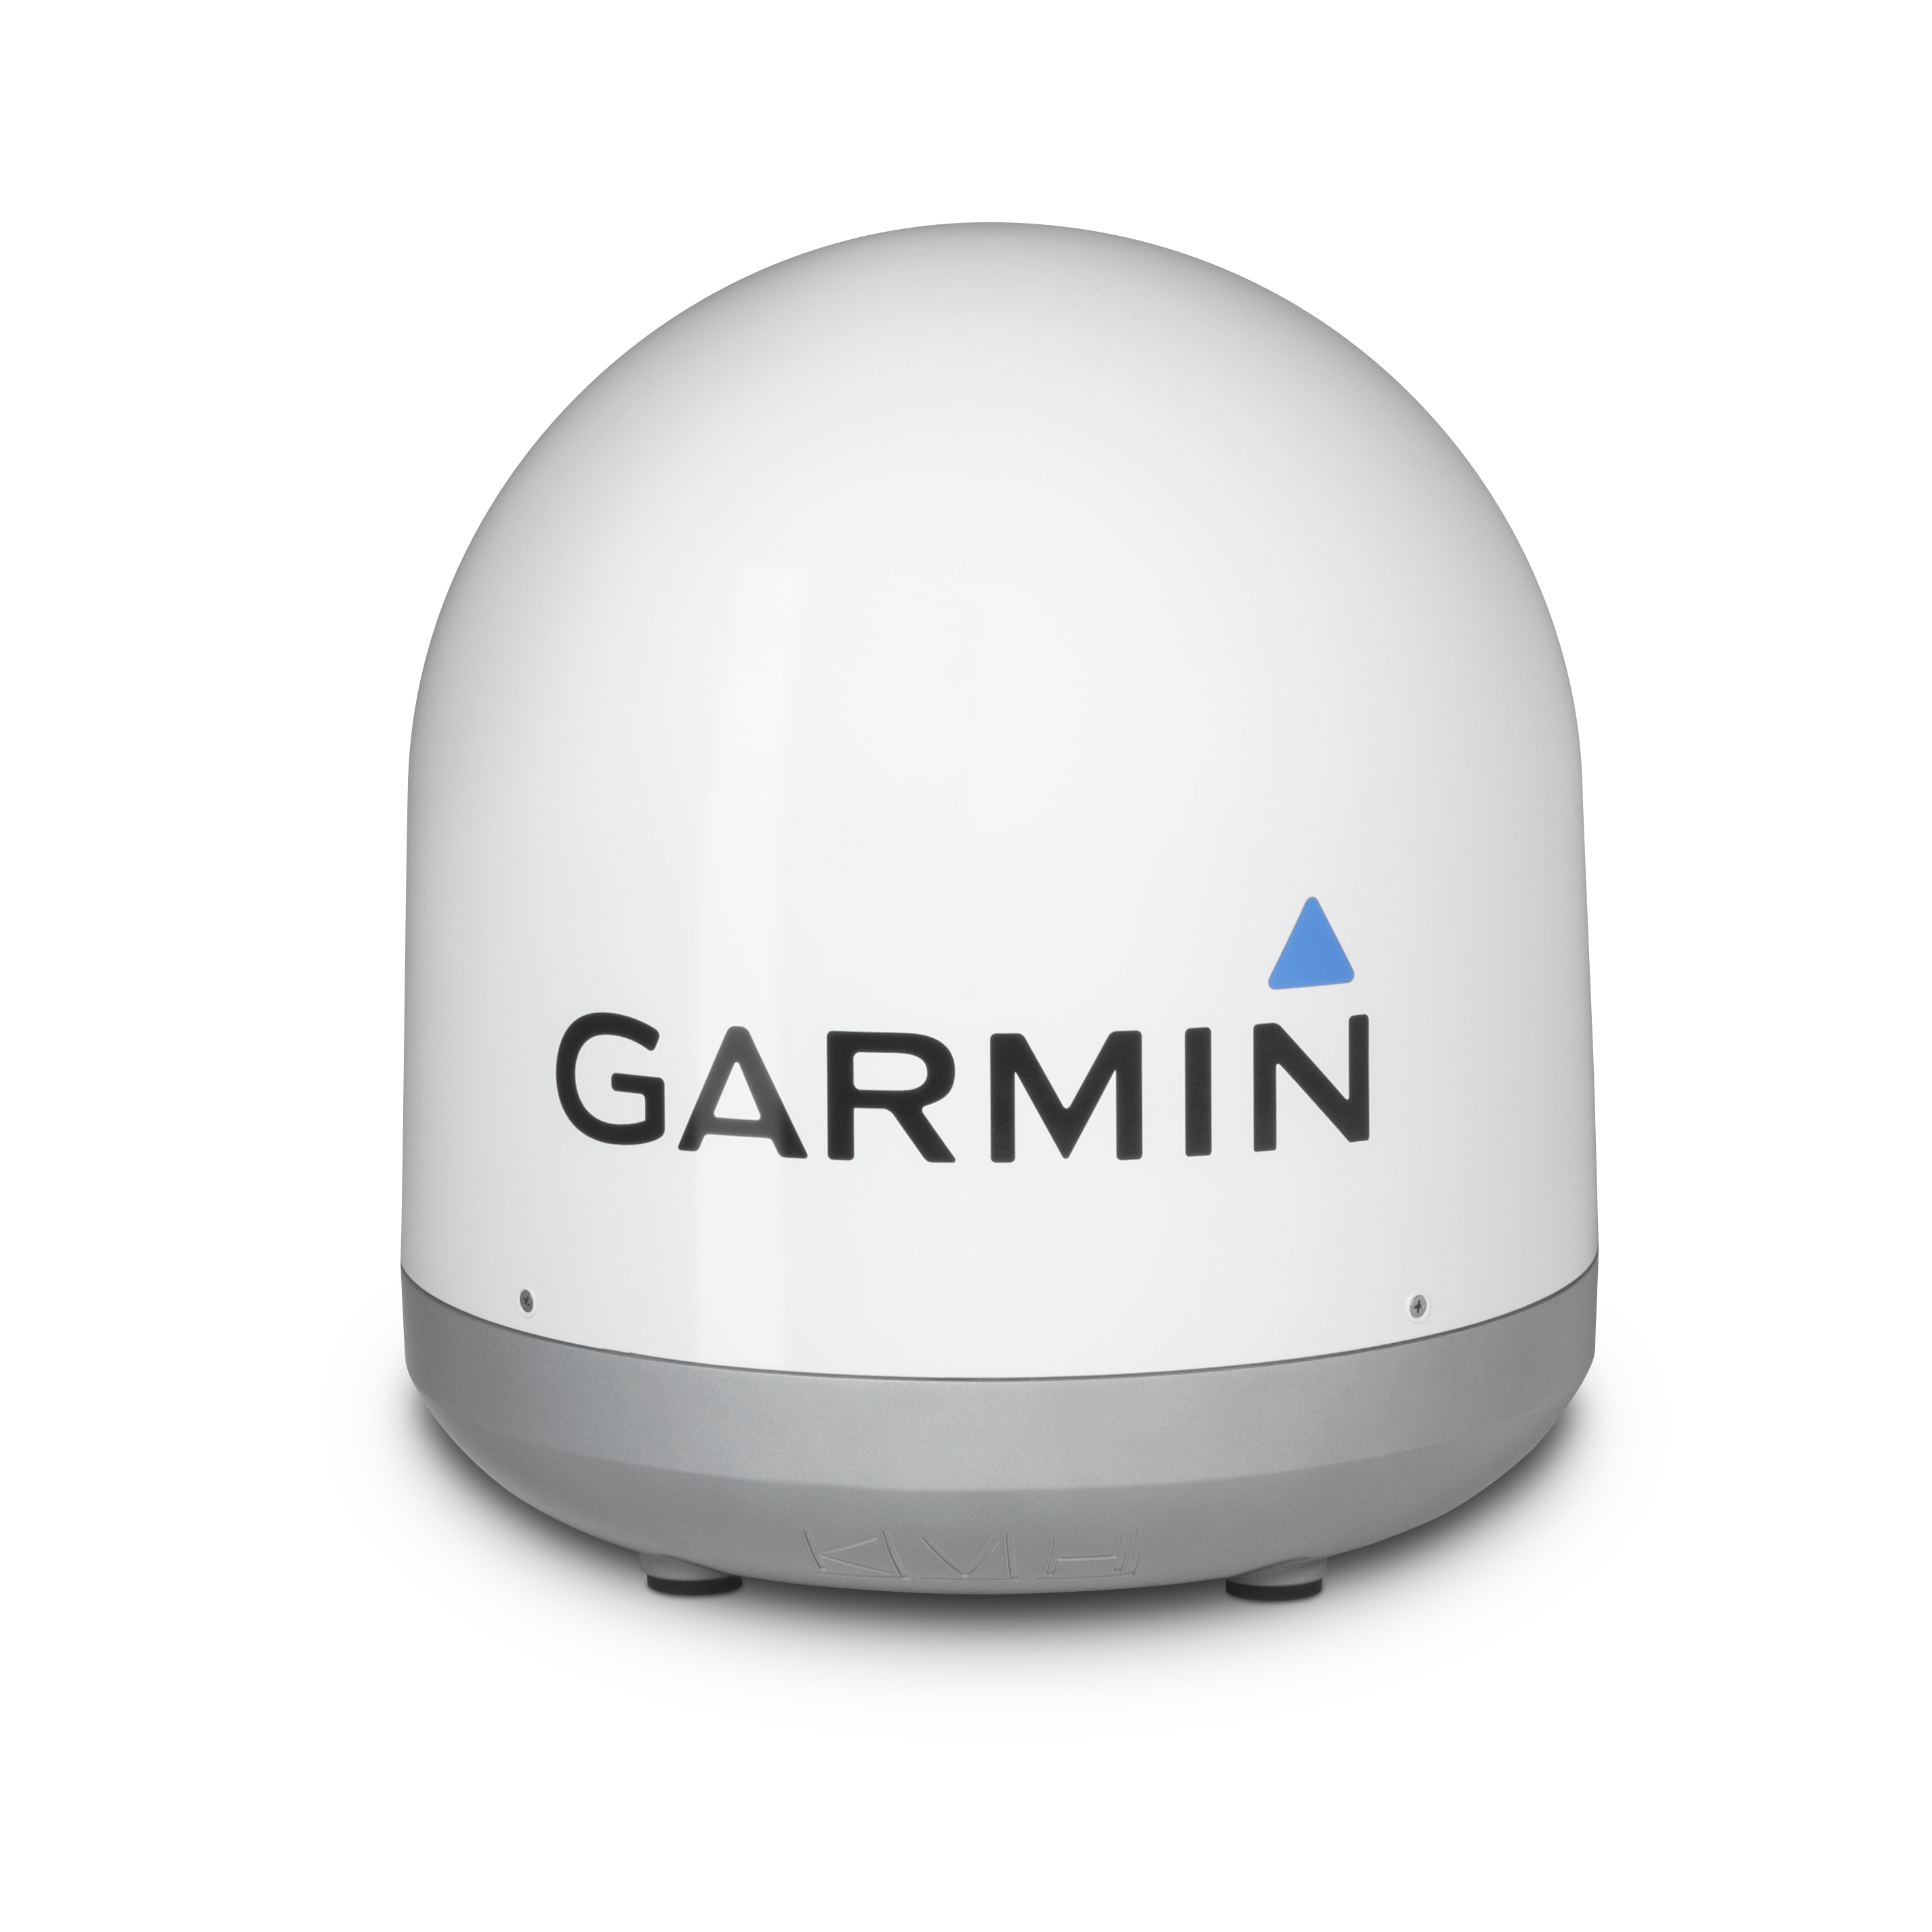 Garmin GTV5 satellit-TV-dome